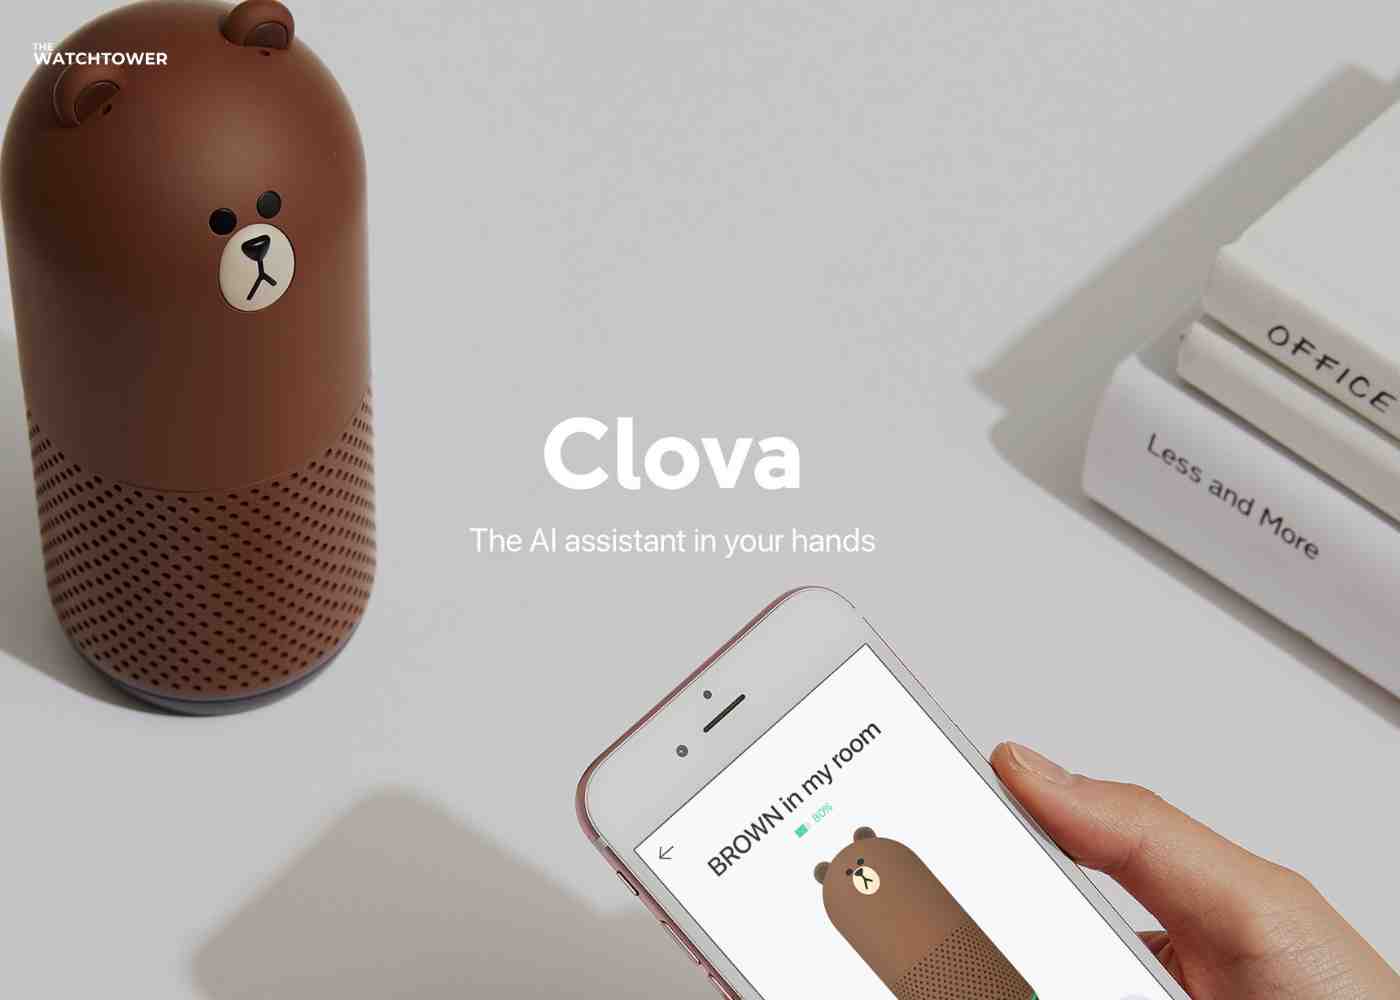 Find you an assistant like Clova